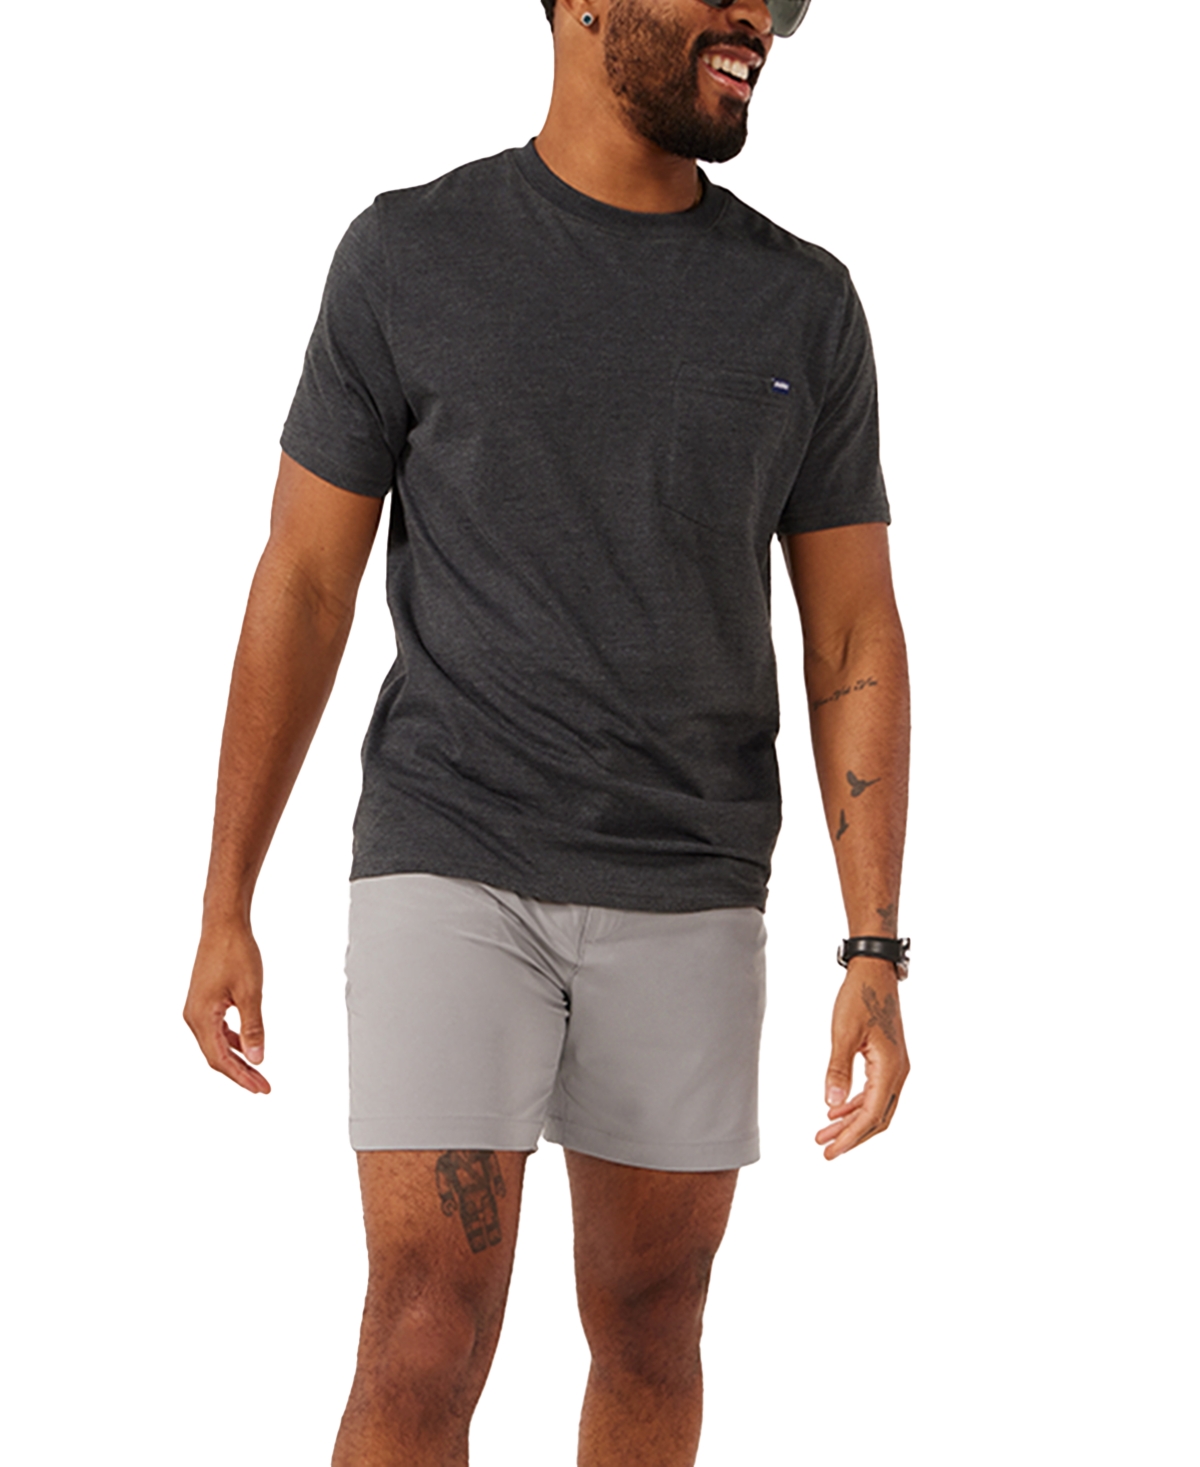 Men's The World's Grayest Standard-Fit Lined 6" Shorts - Medium Gre